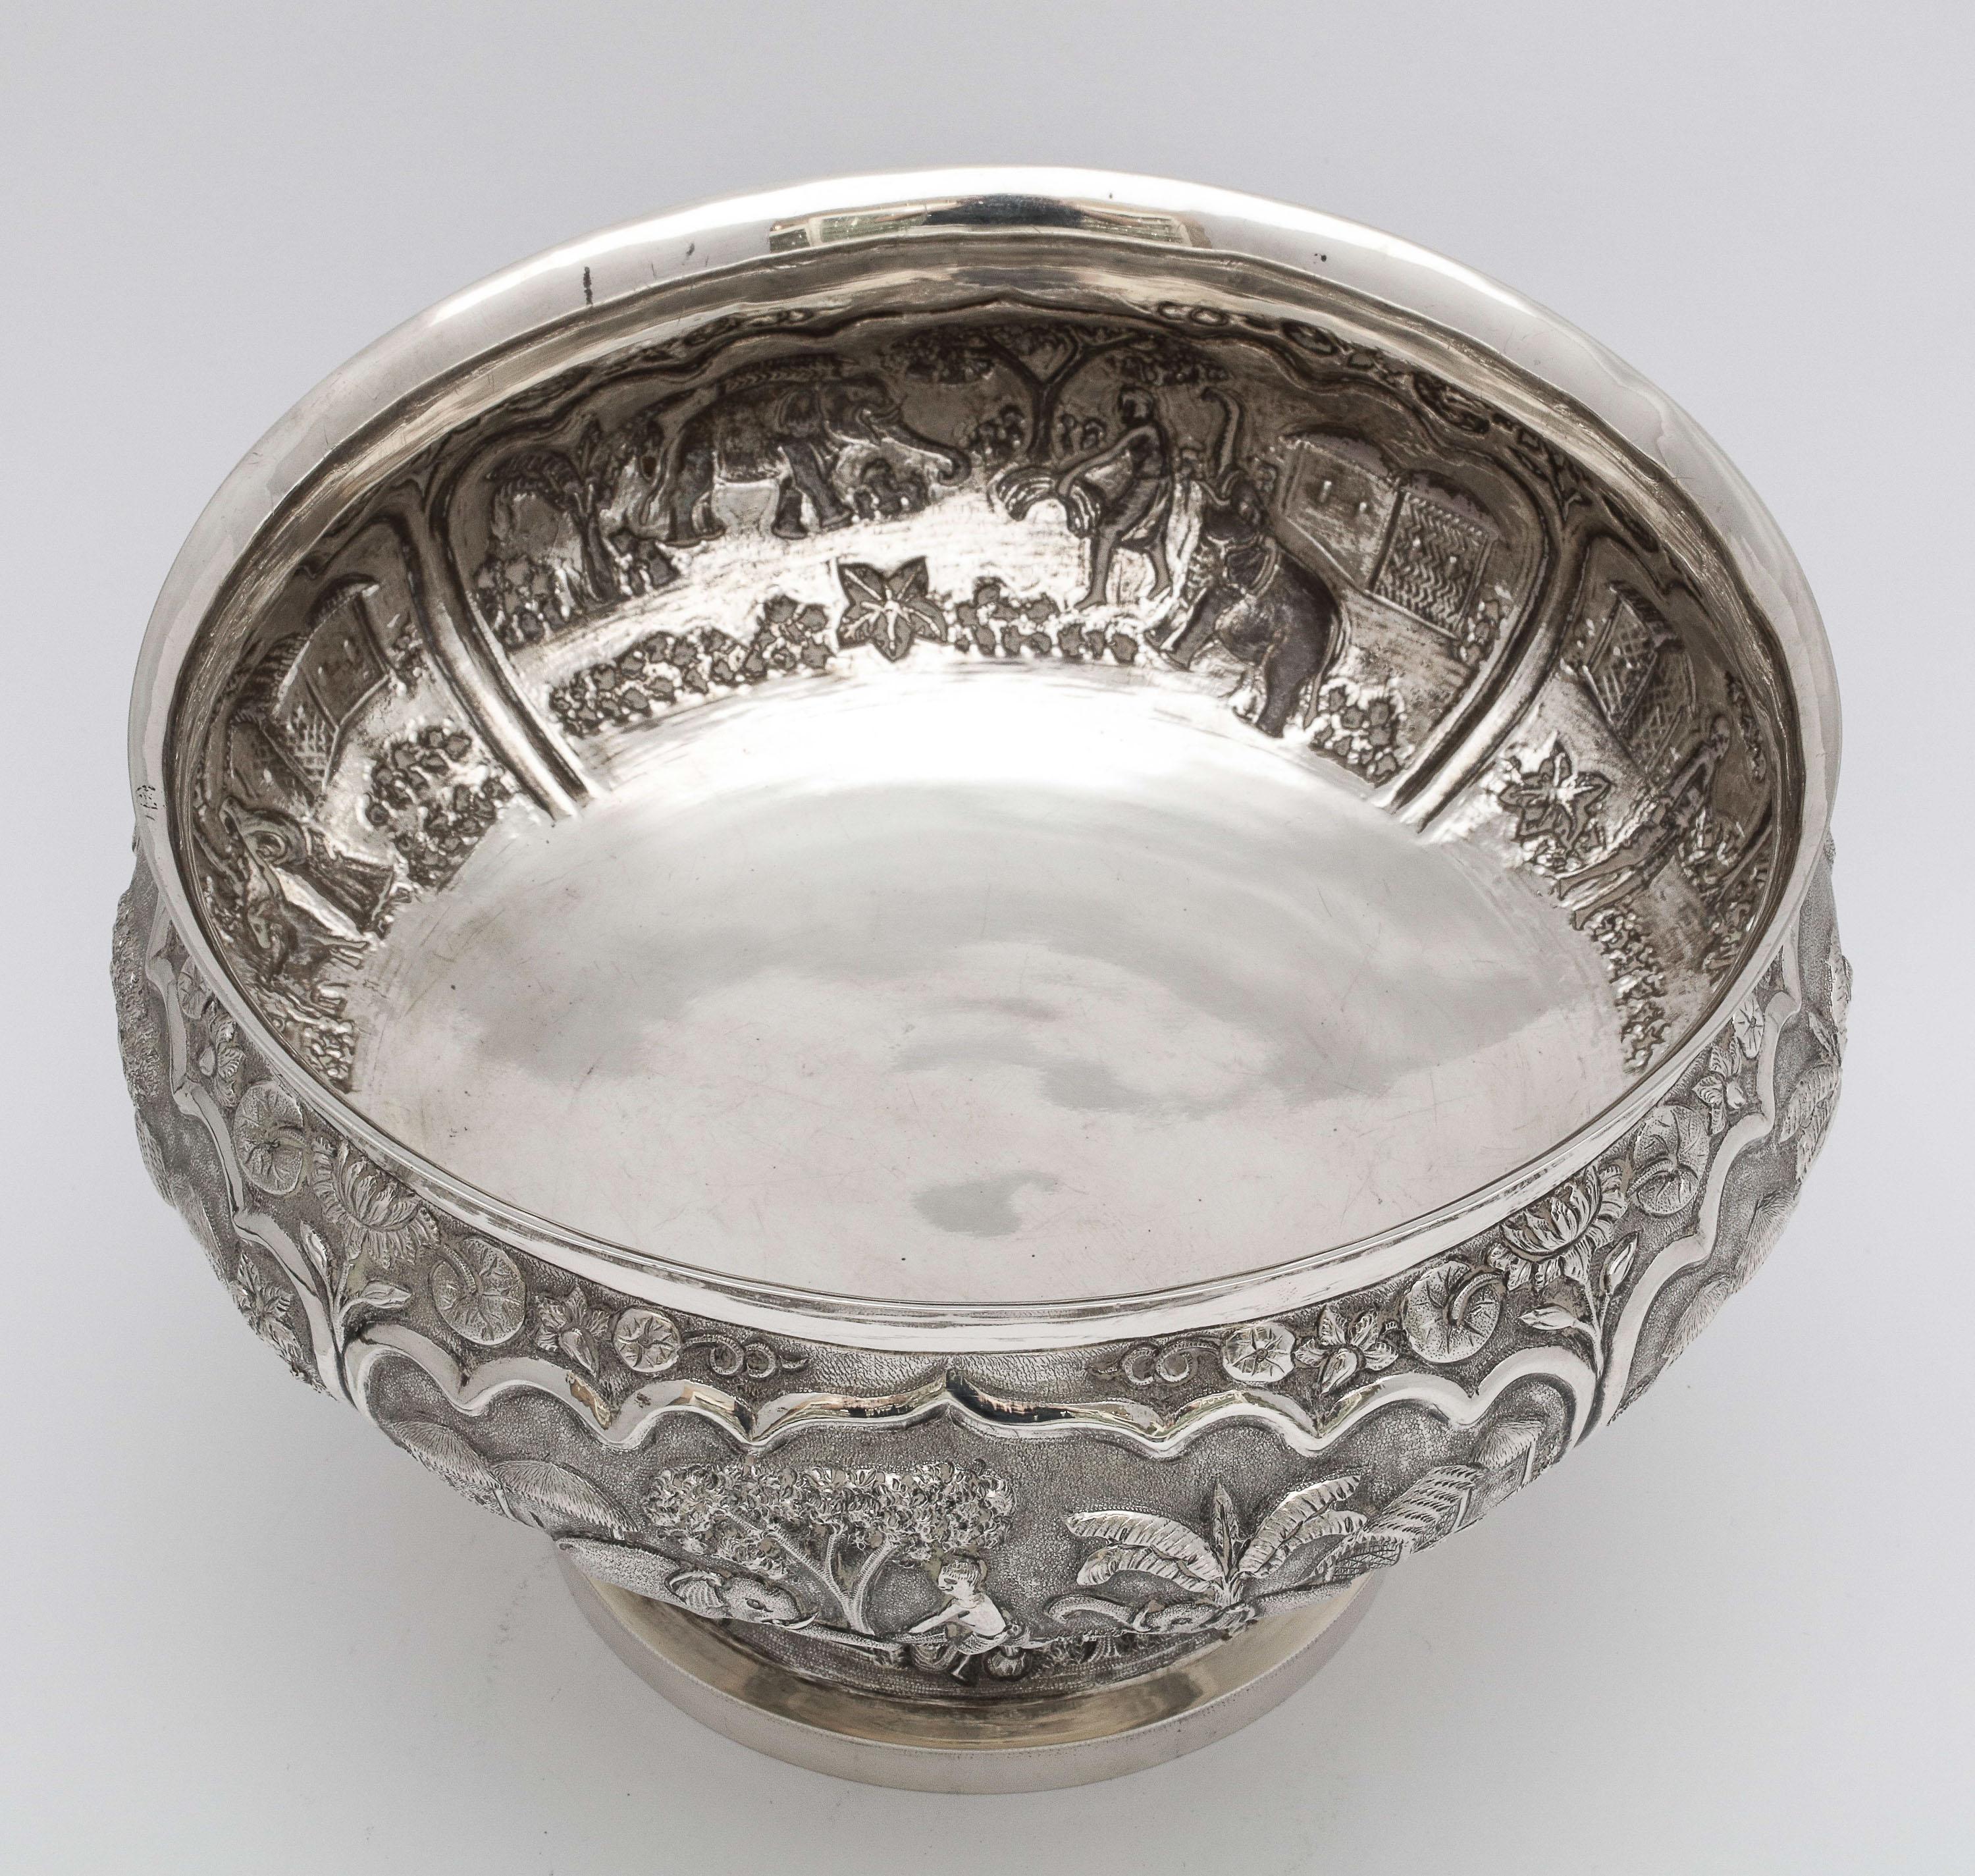 Late 19th Century Burmese/Myanmar Silver Pedestal-Based Bowl 13